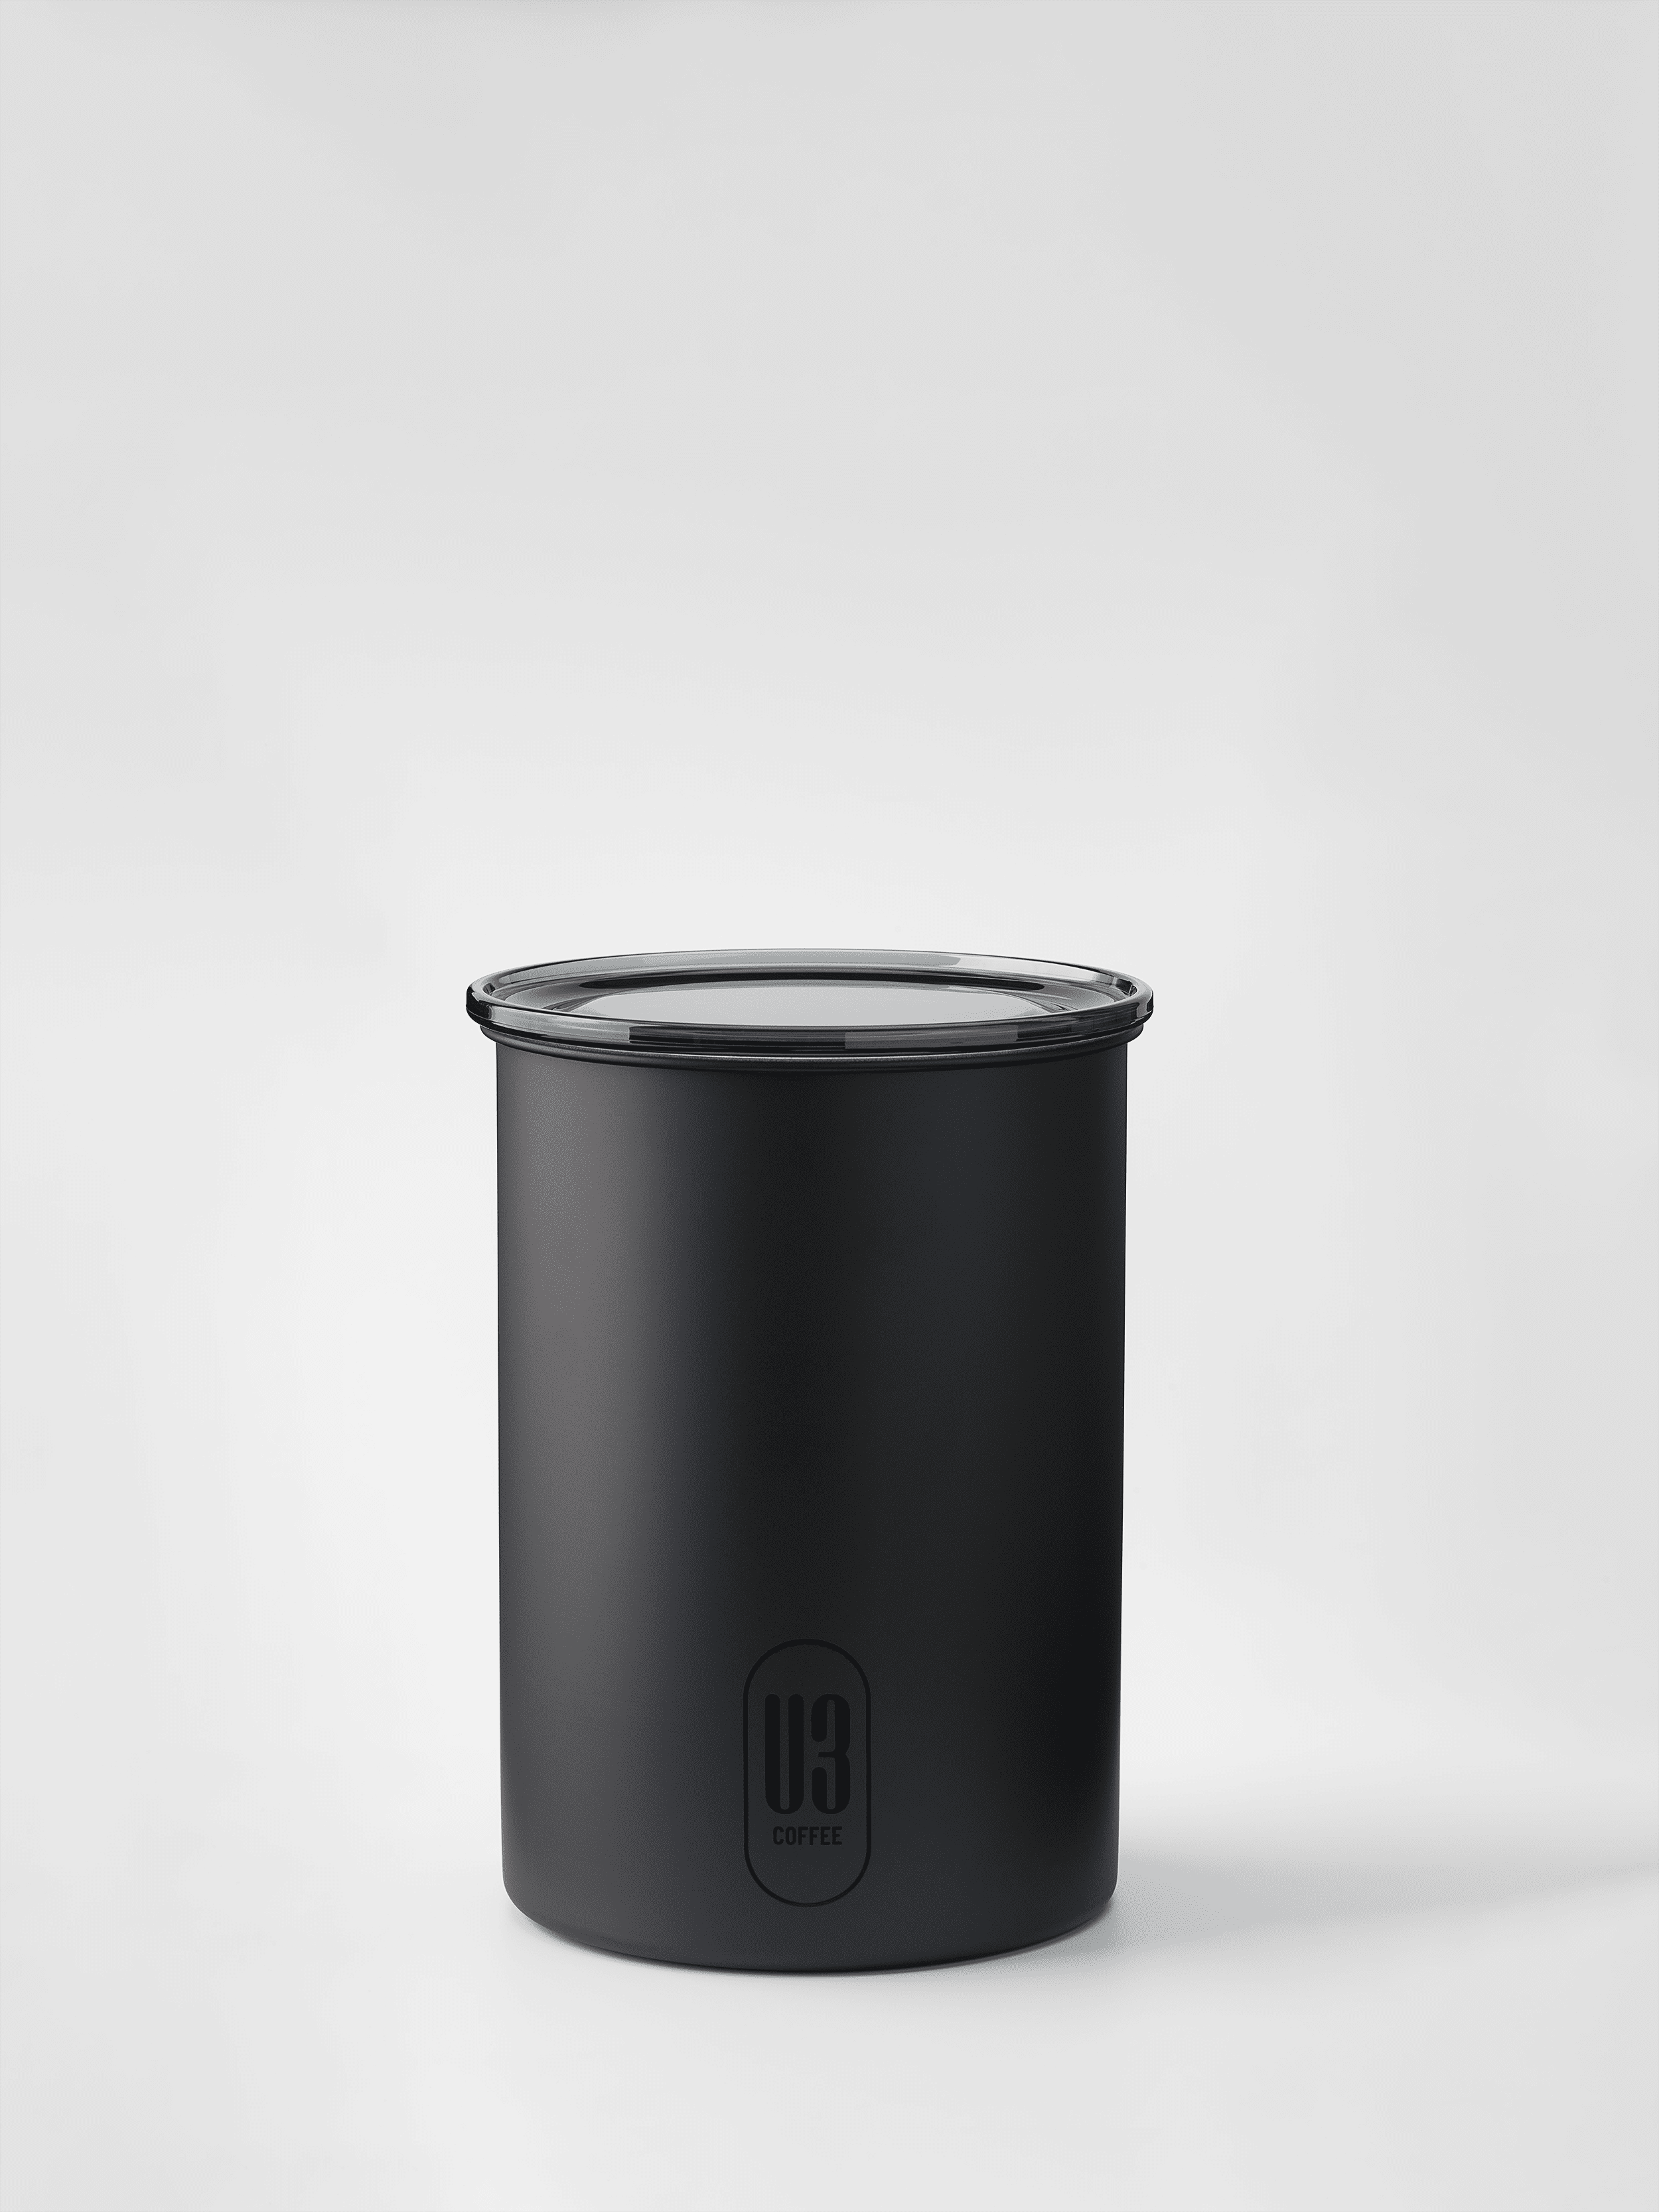 u3 coffee storage canister